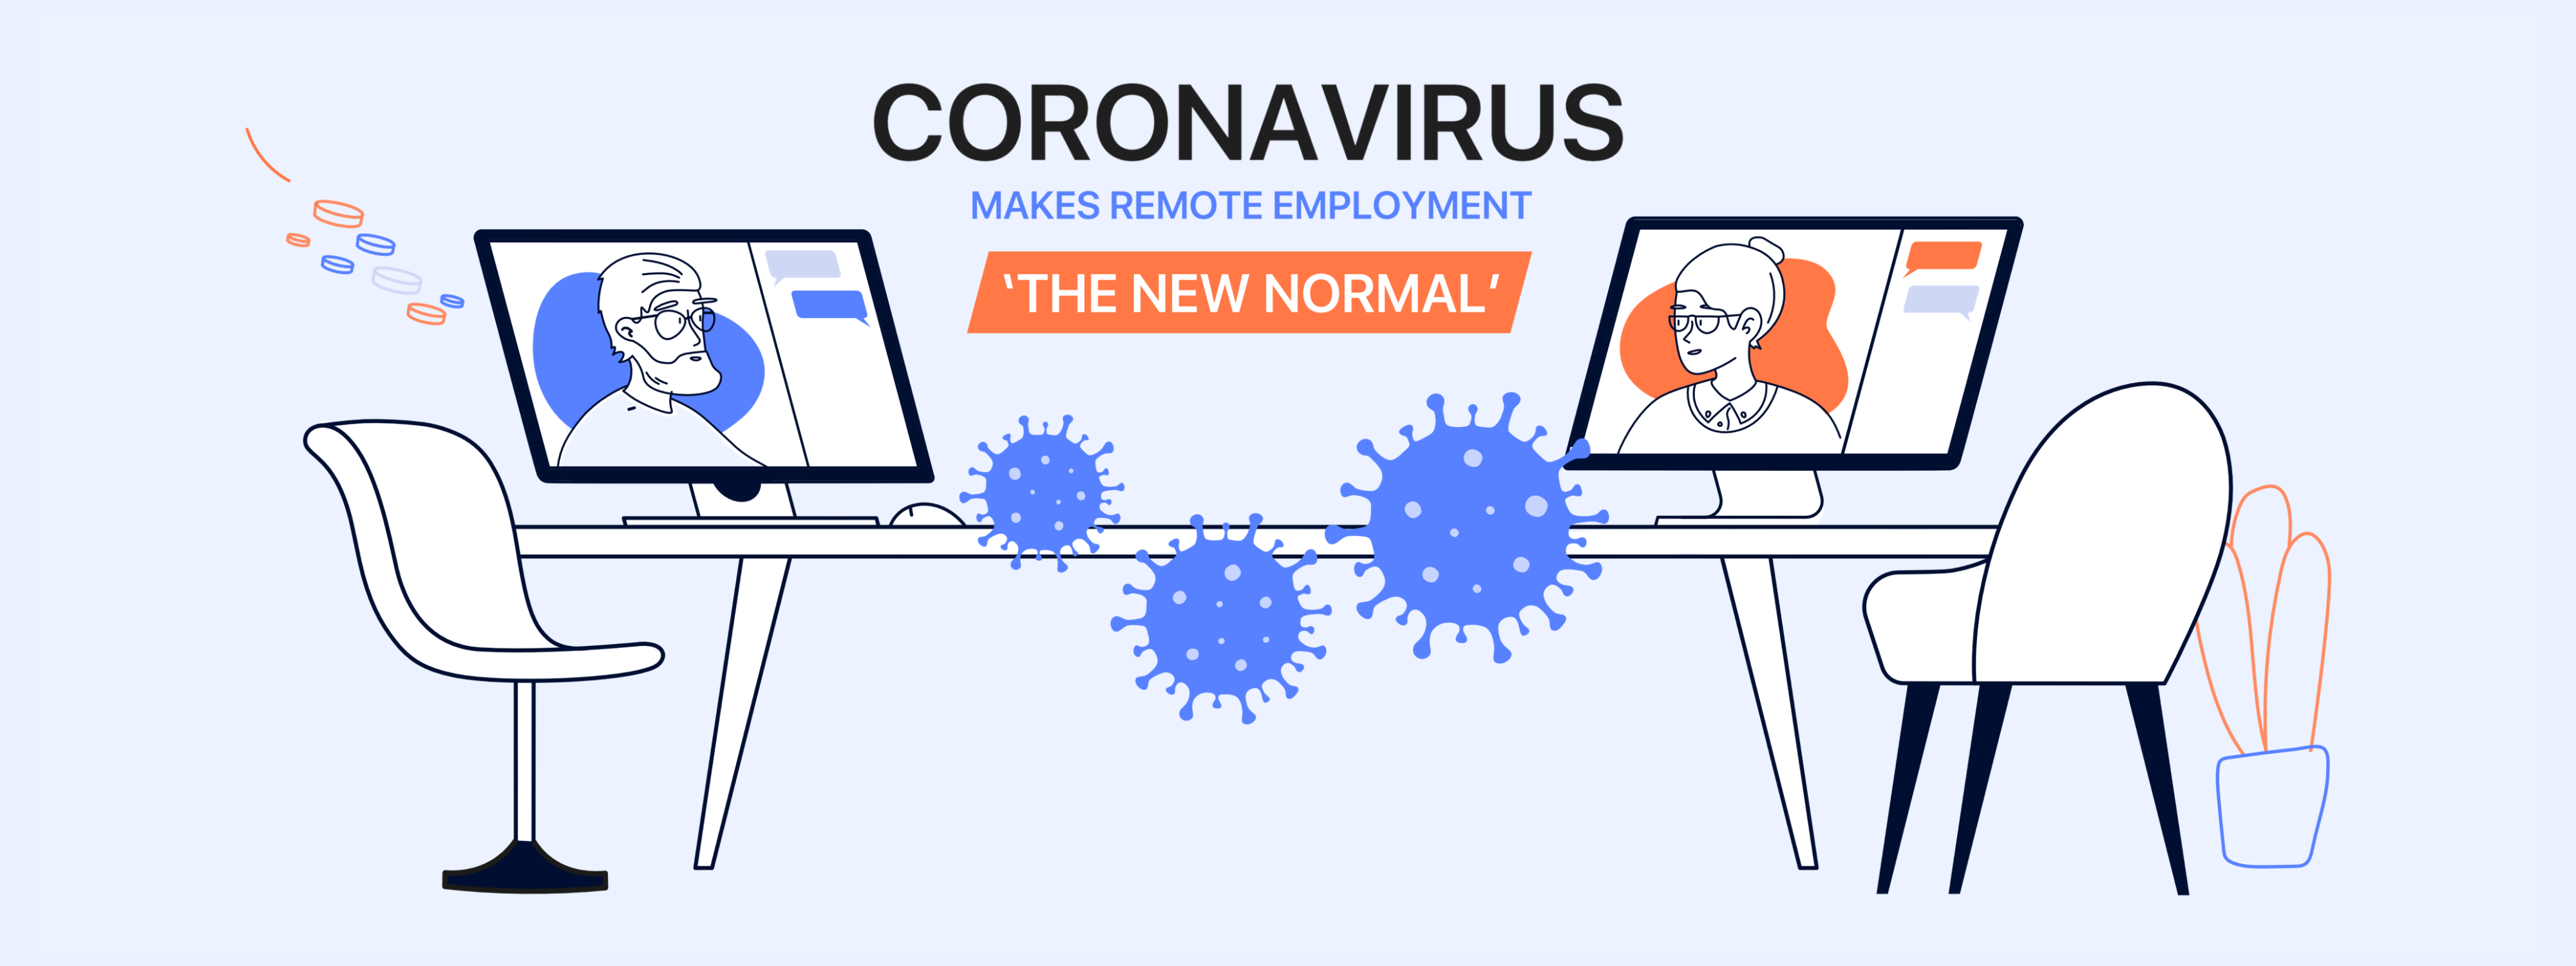 Coronavirus makes remote employment ‘the new normal’